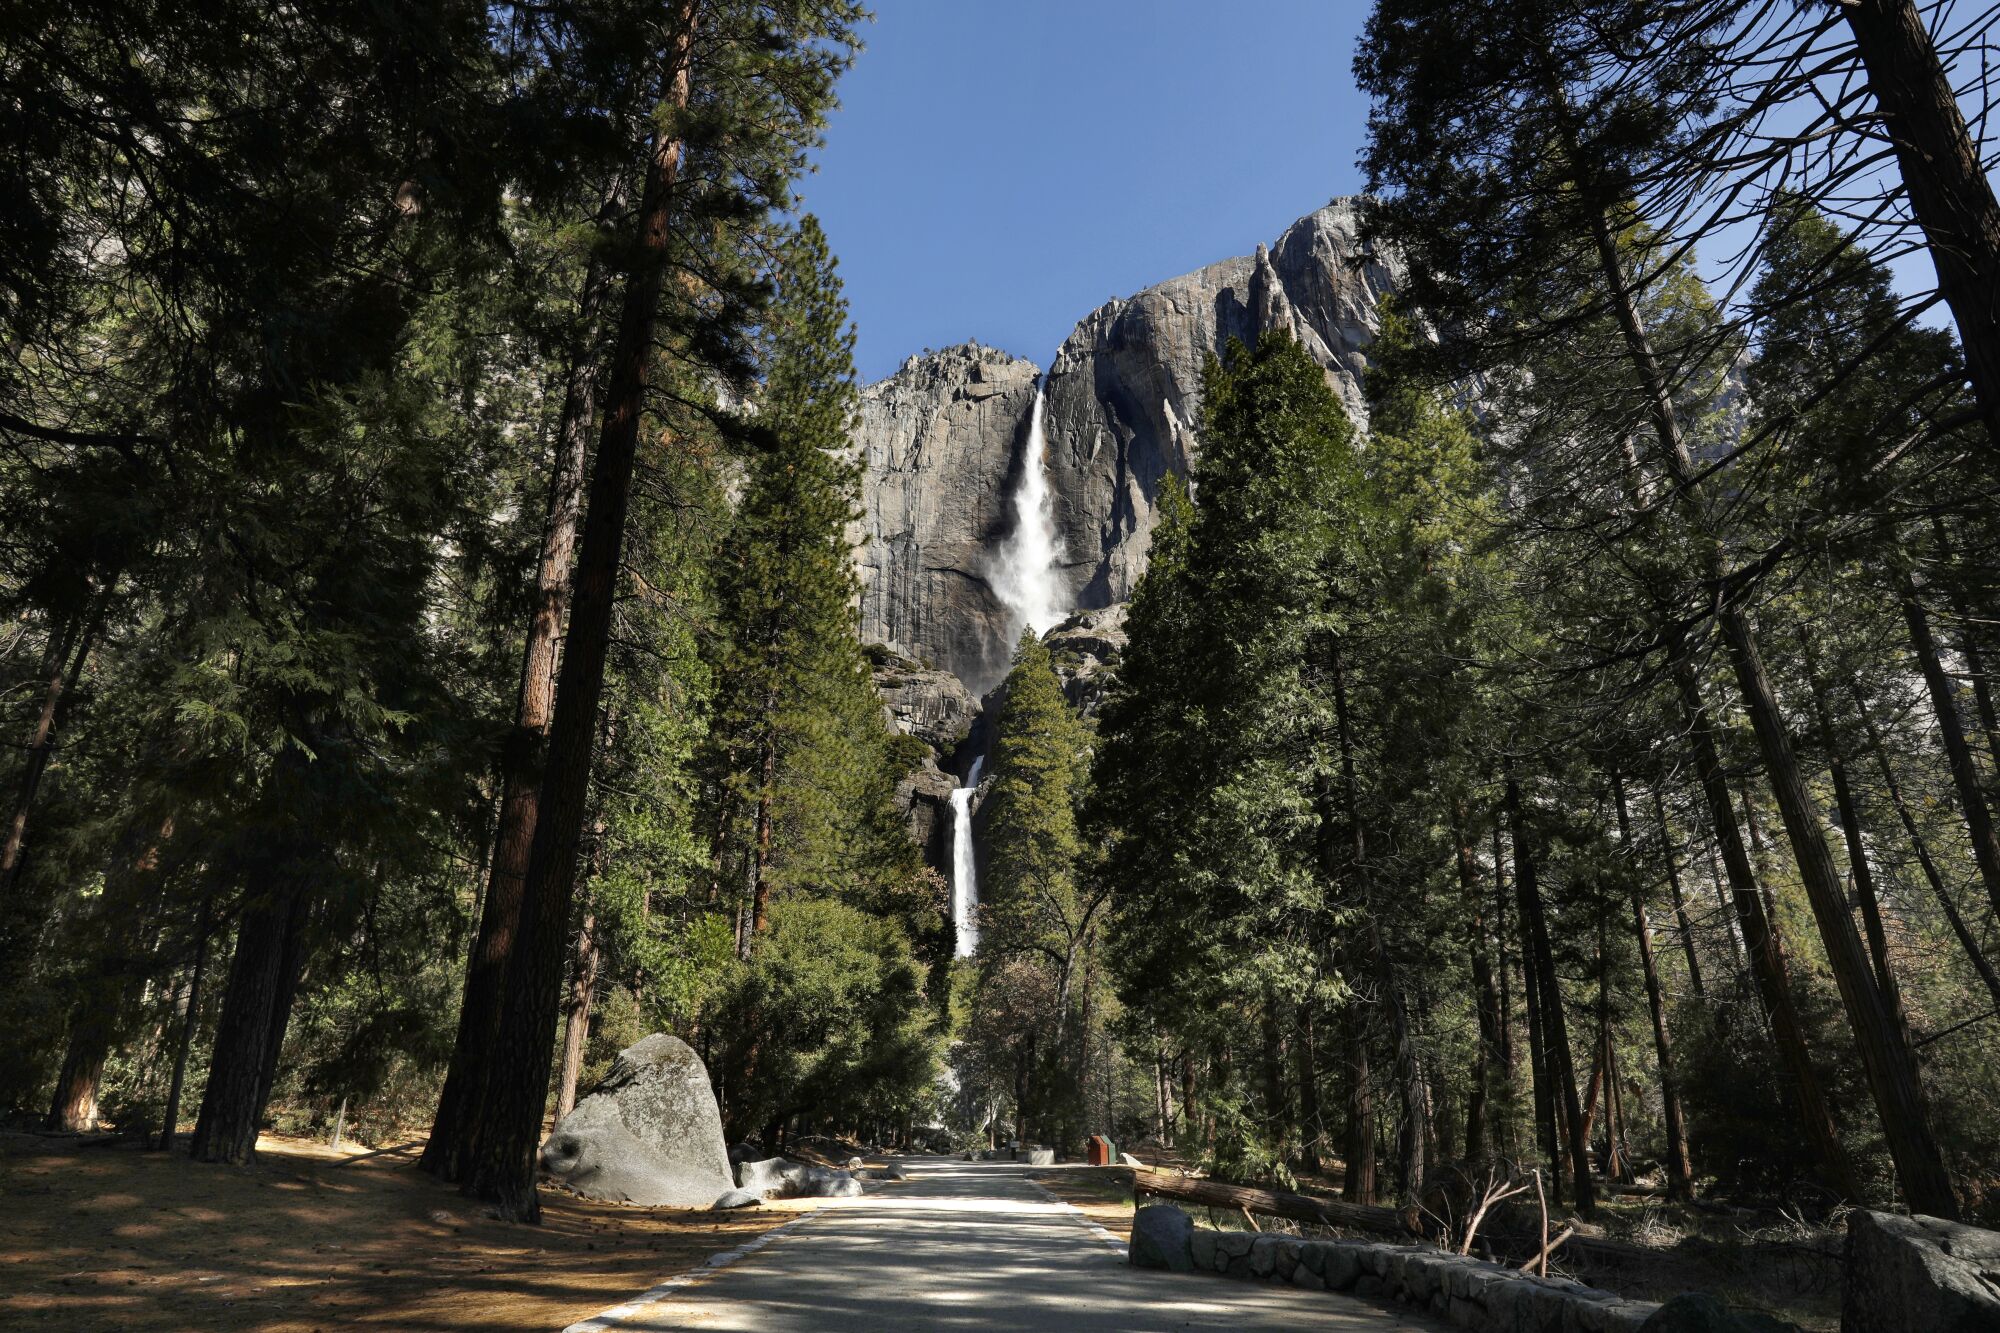 Yosemite Falls seen without people.